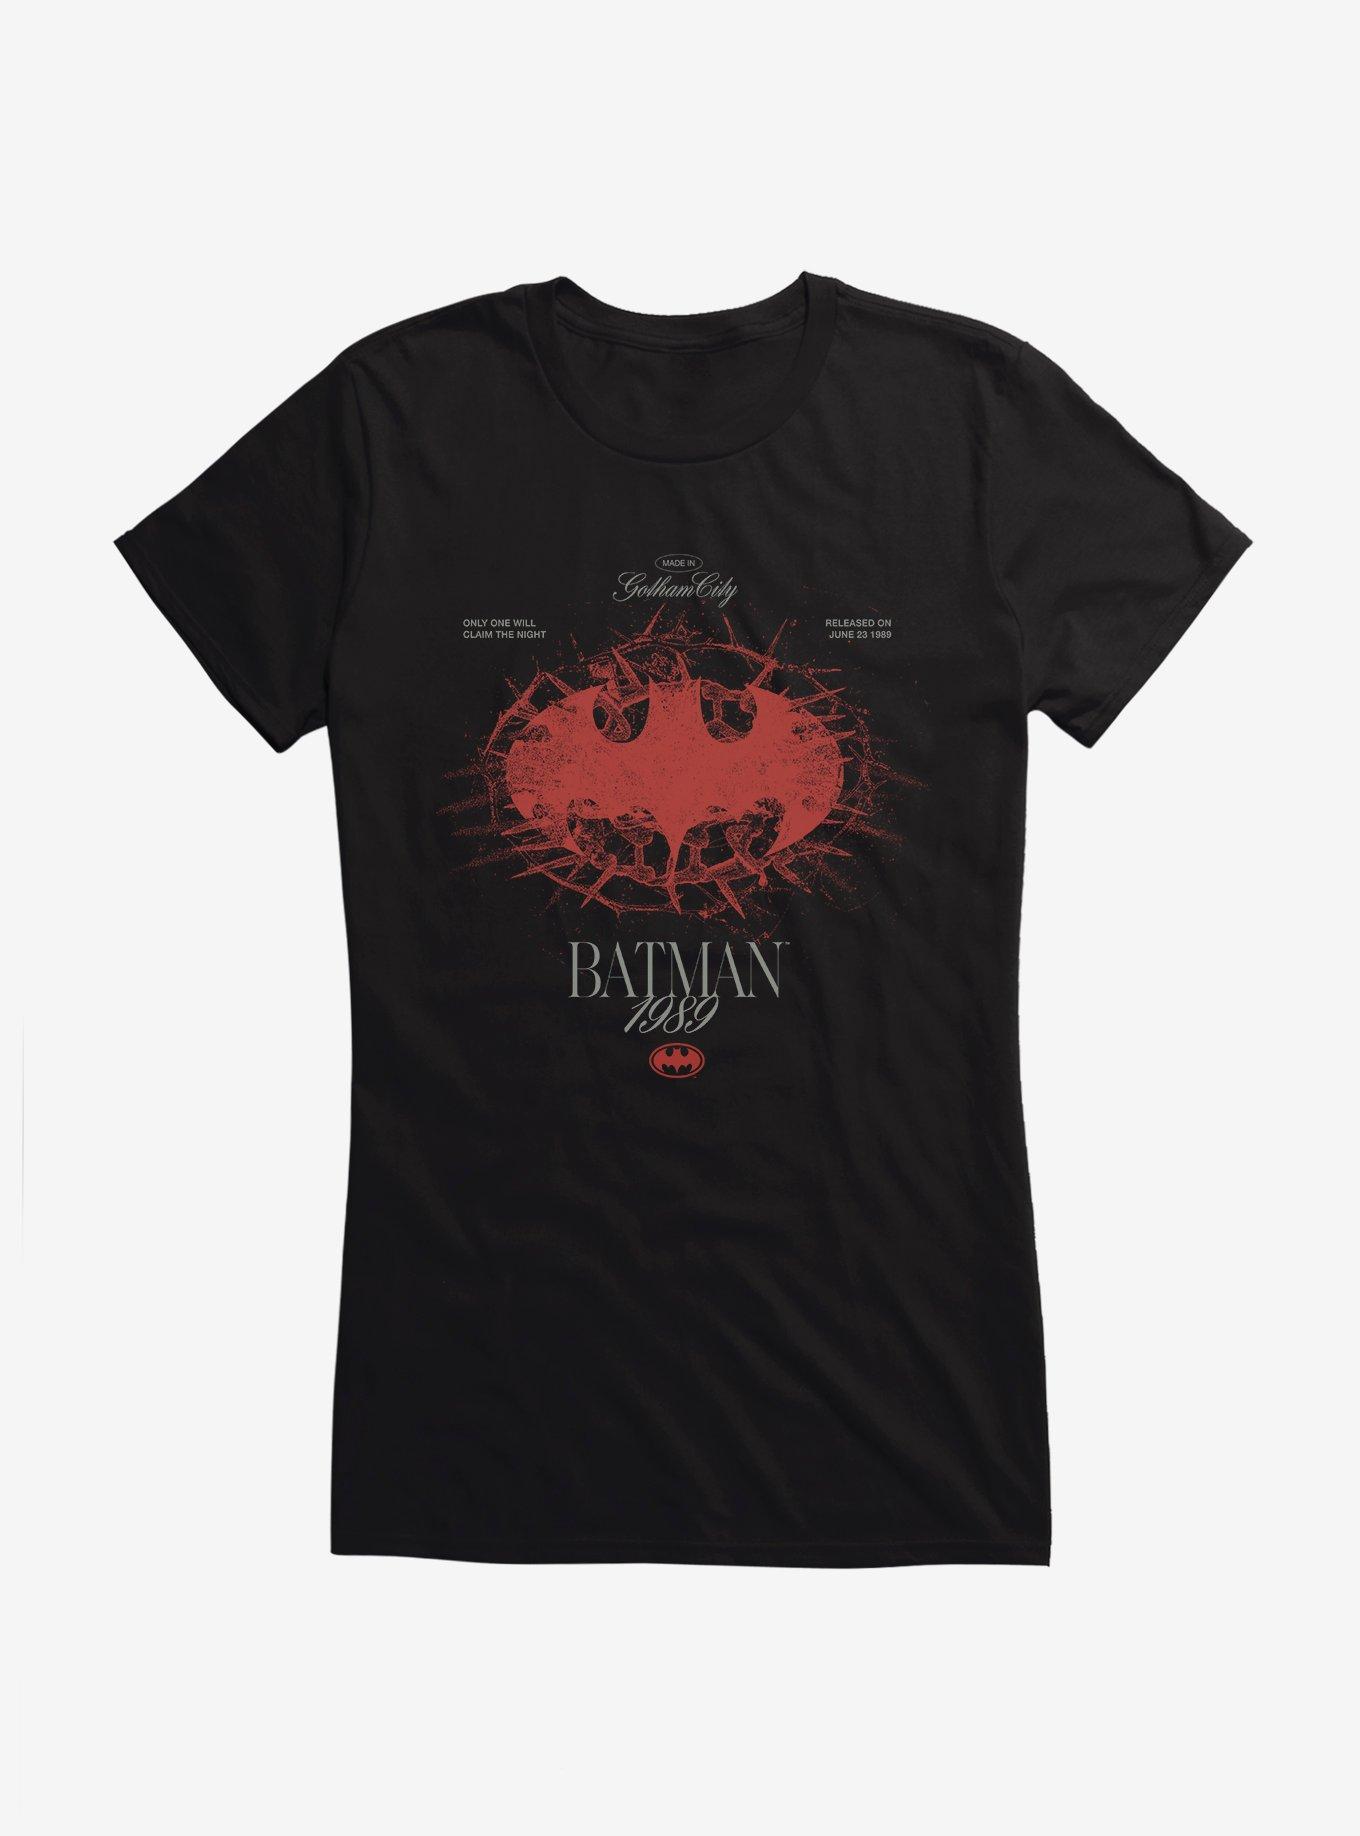 Batman 1989 Made In Gotham City Girls T-Shirt, , hi-res